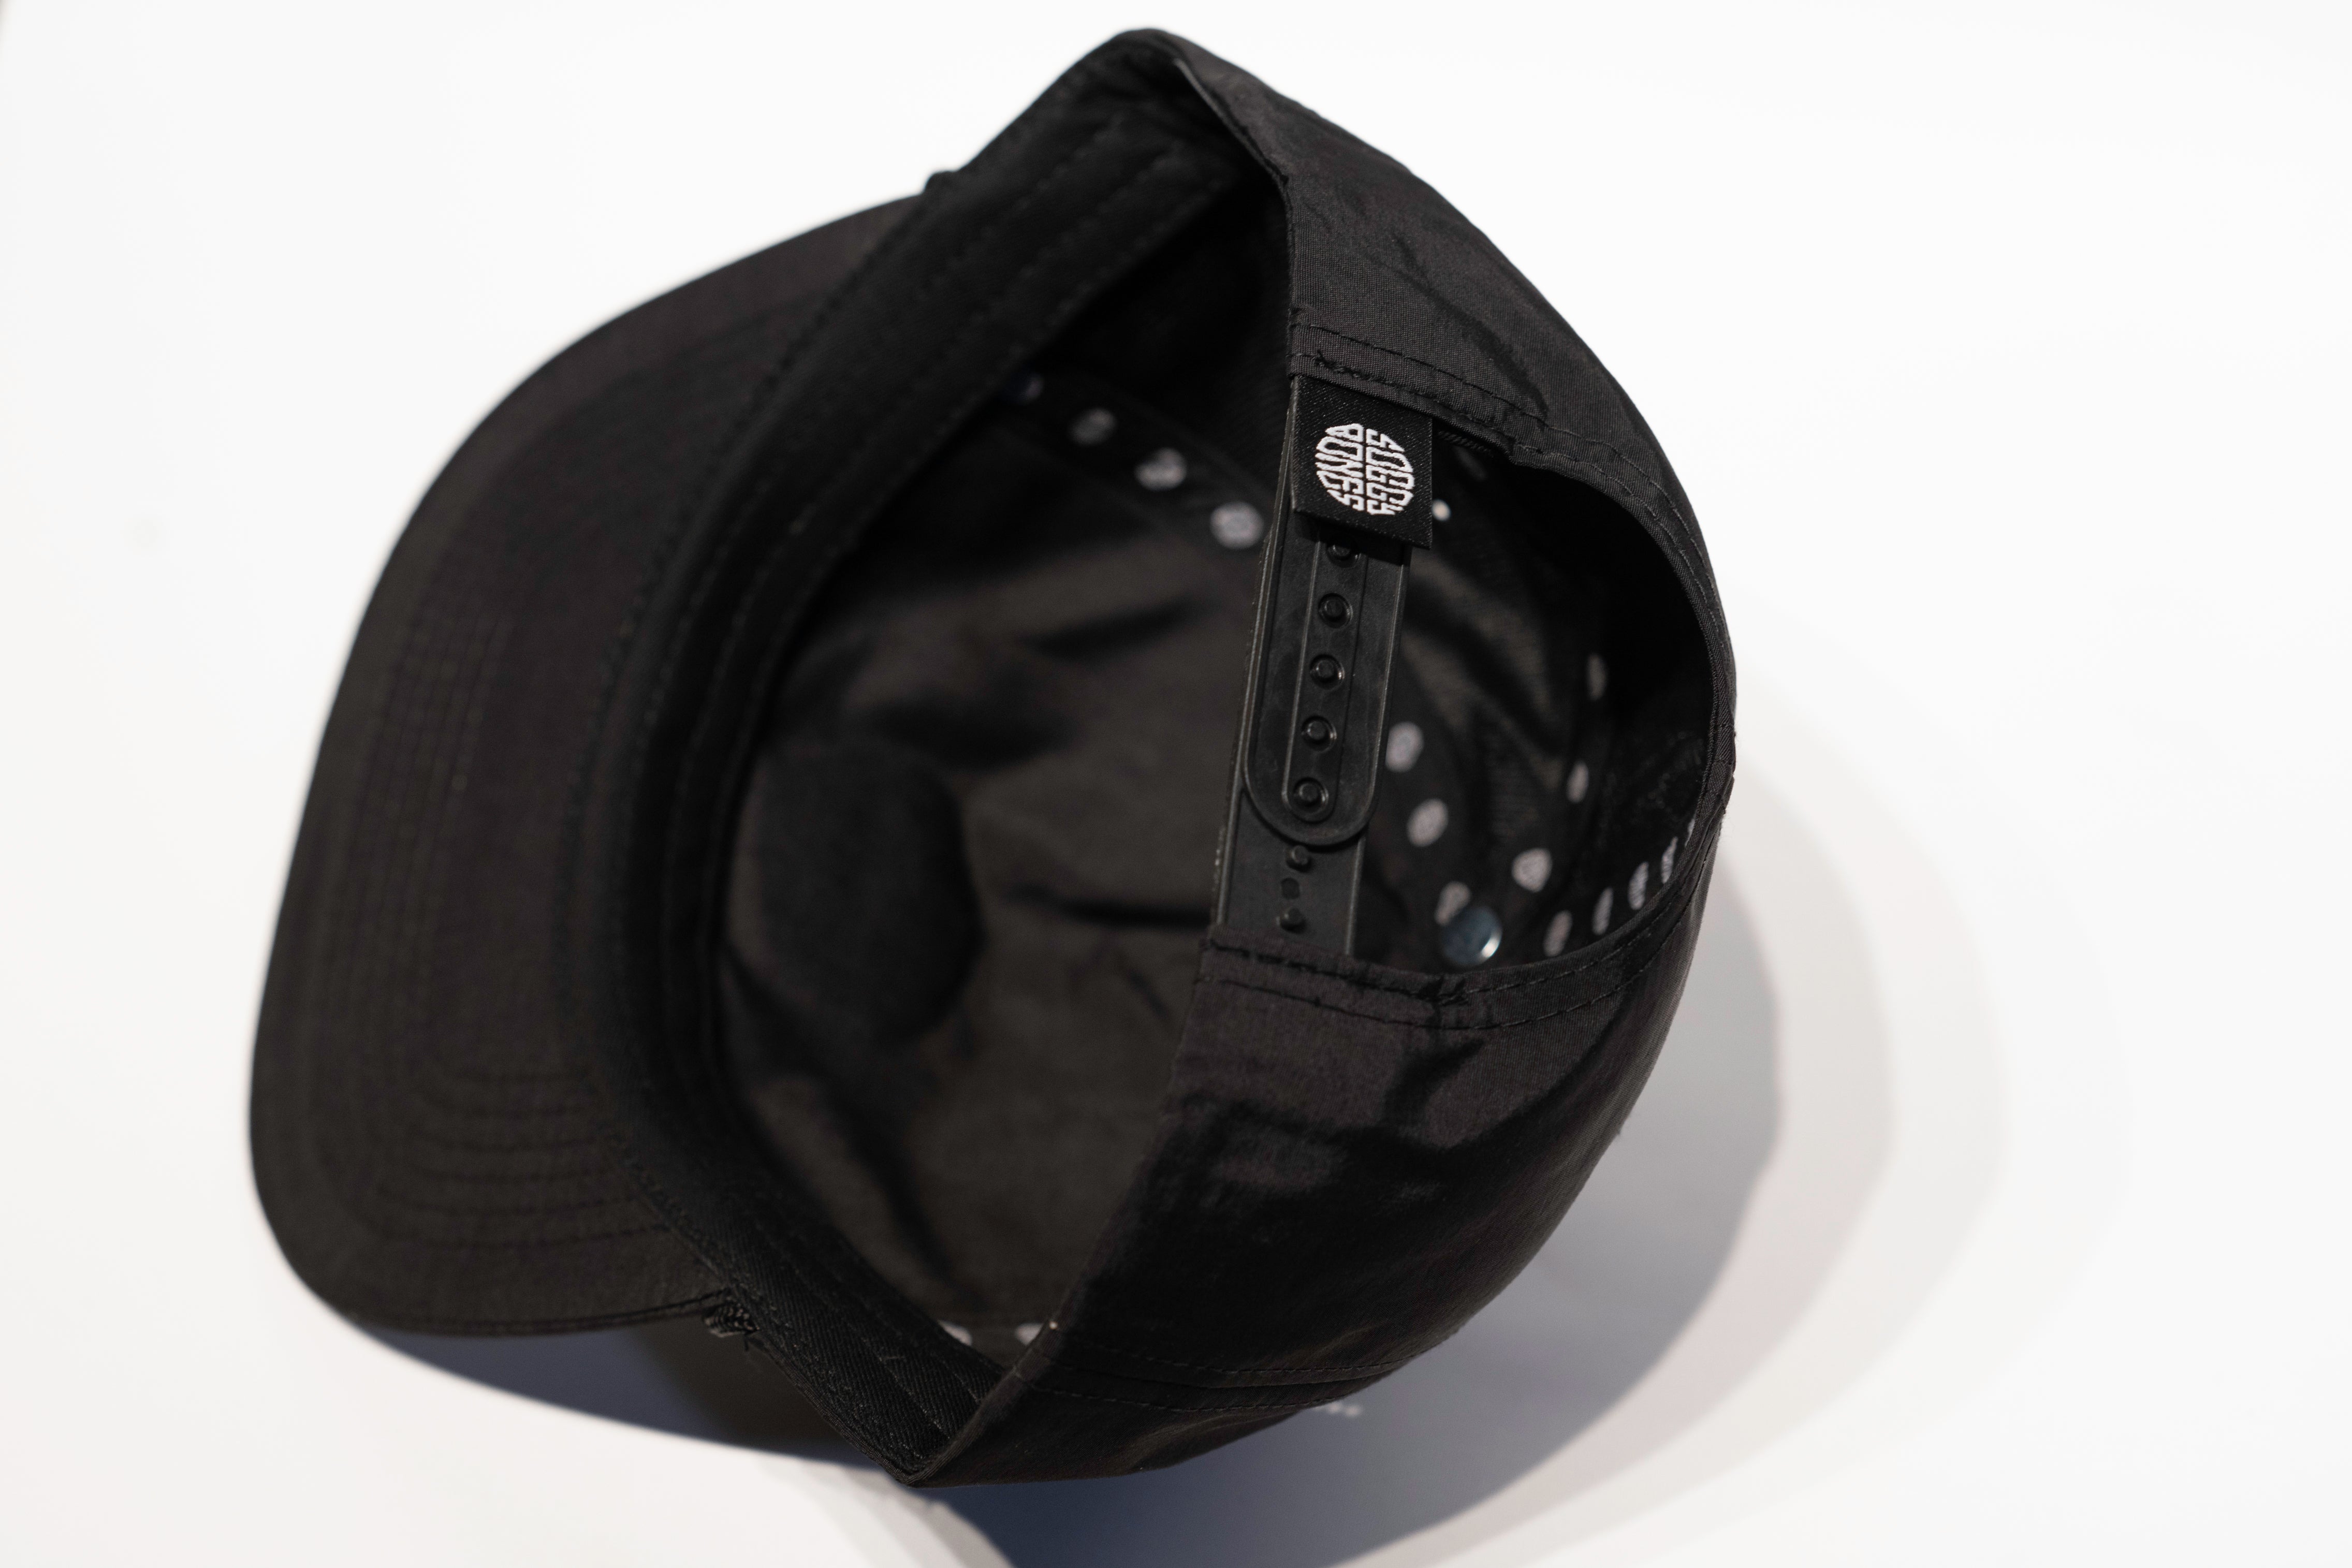 Soggybones Roped Nylon Classic cap , Black / White